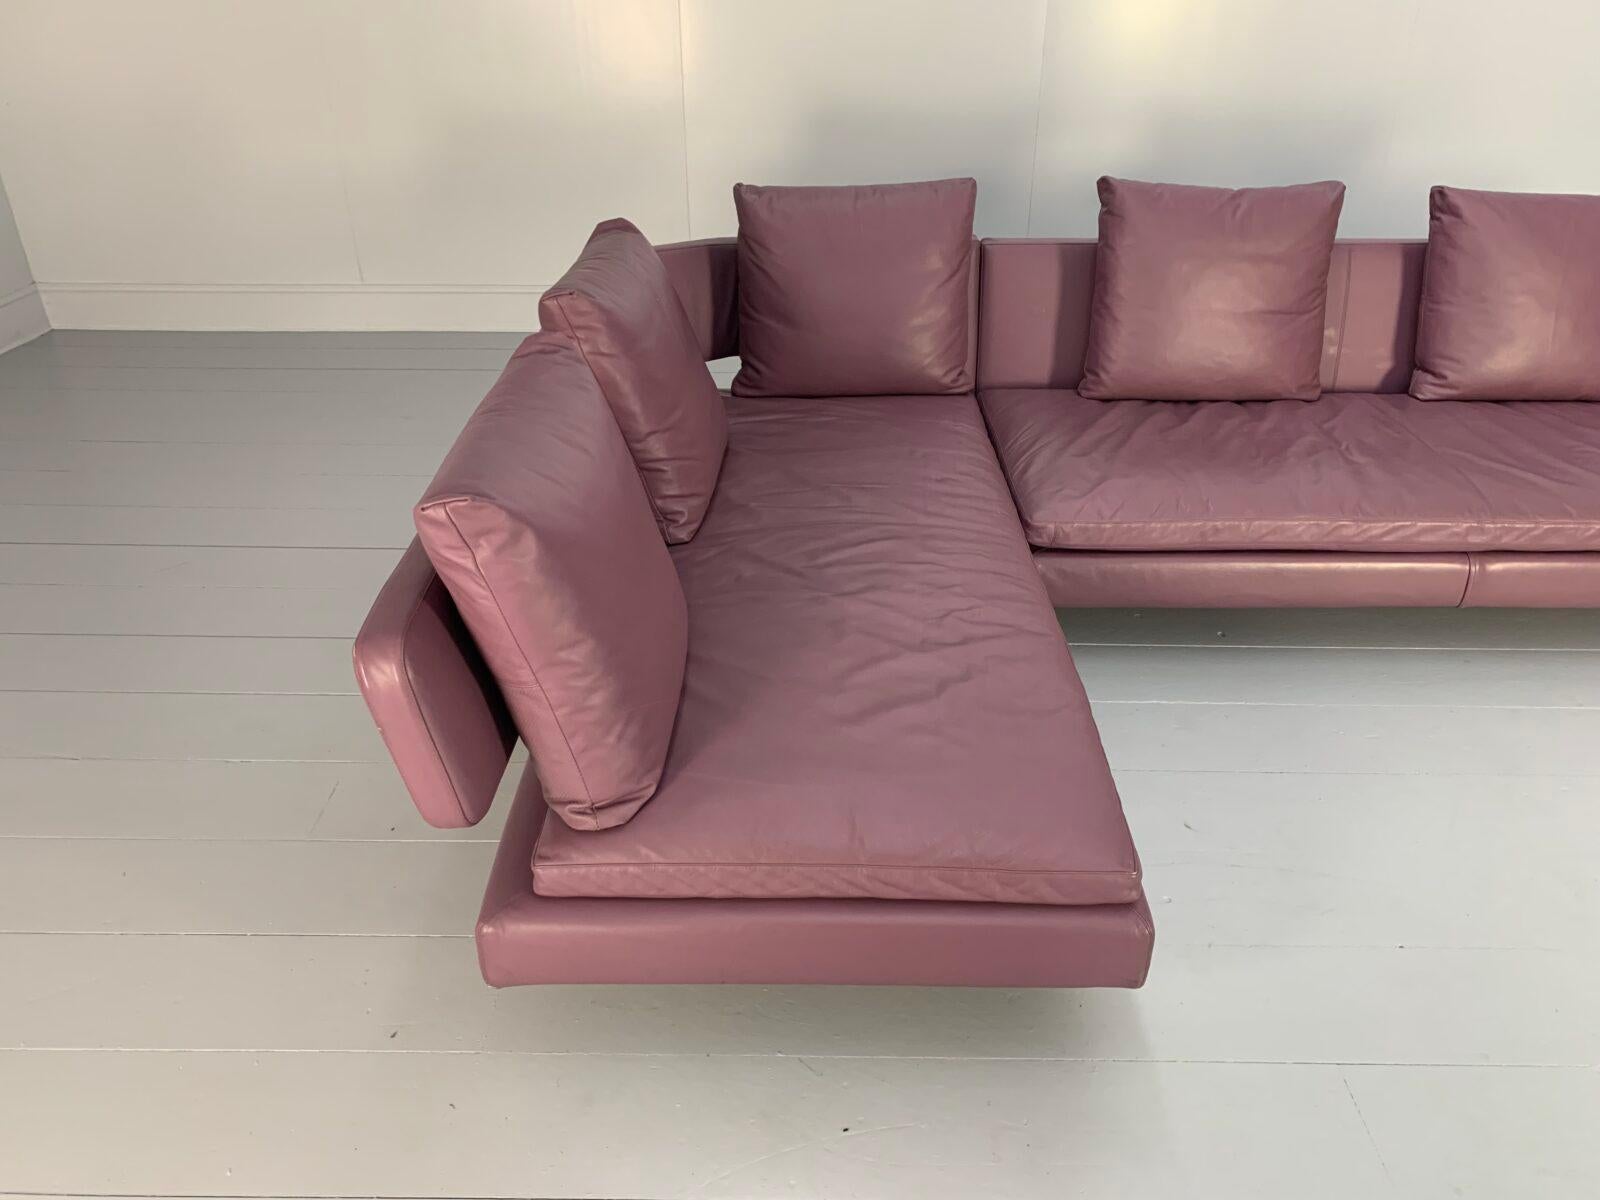 B&B ITALIA “ARNE” 6-Seat L-Shape Sofa – In Mauve Pale-Purple “GAMMA” Leather In Good Condition For Sale In Barrowford, GB